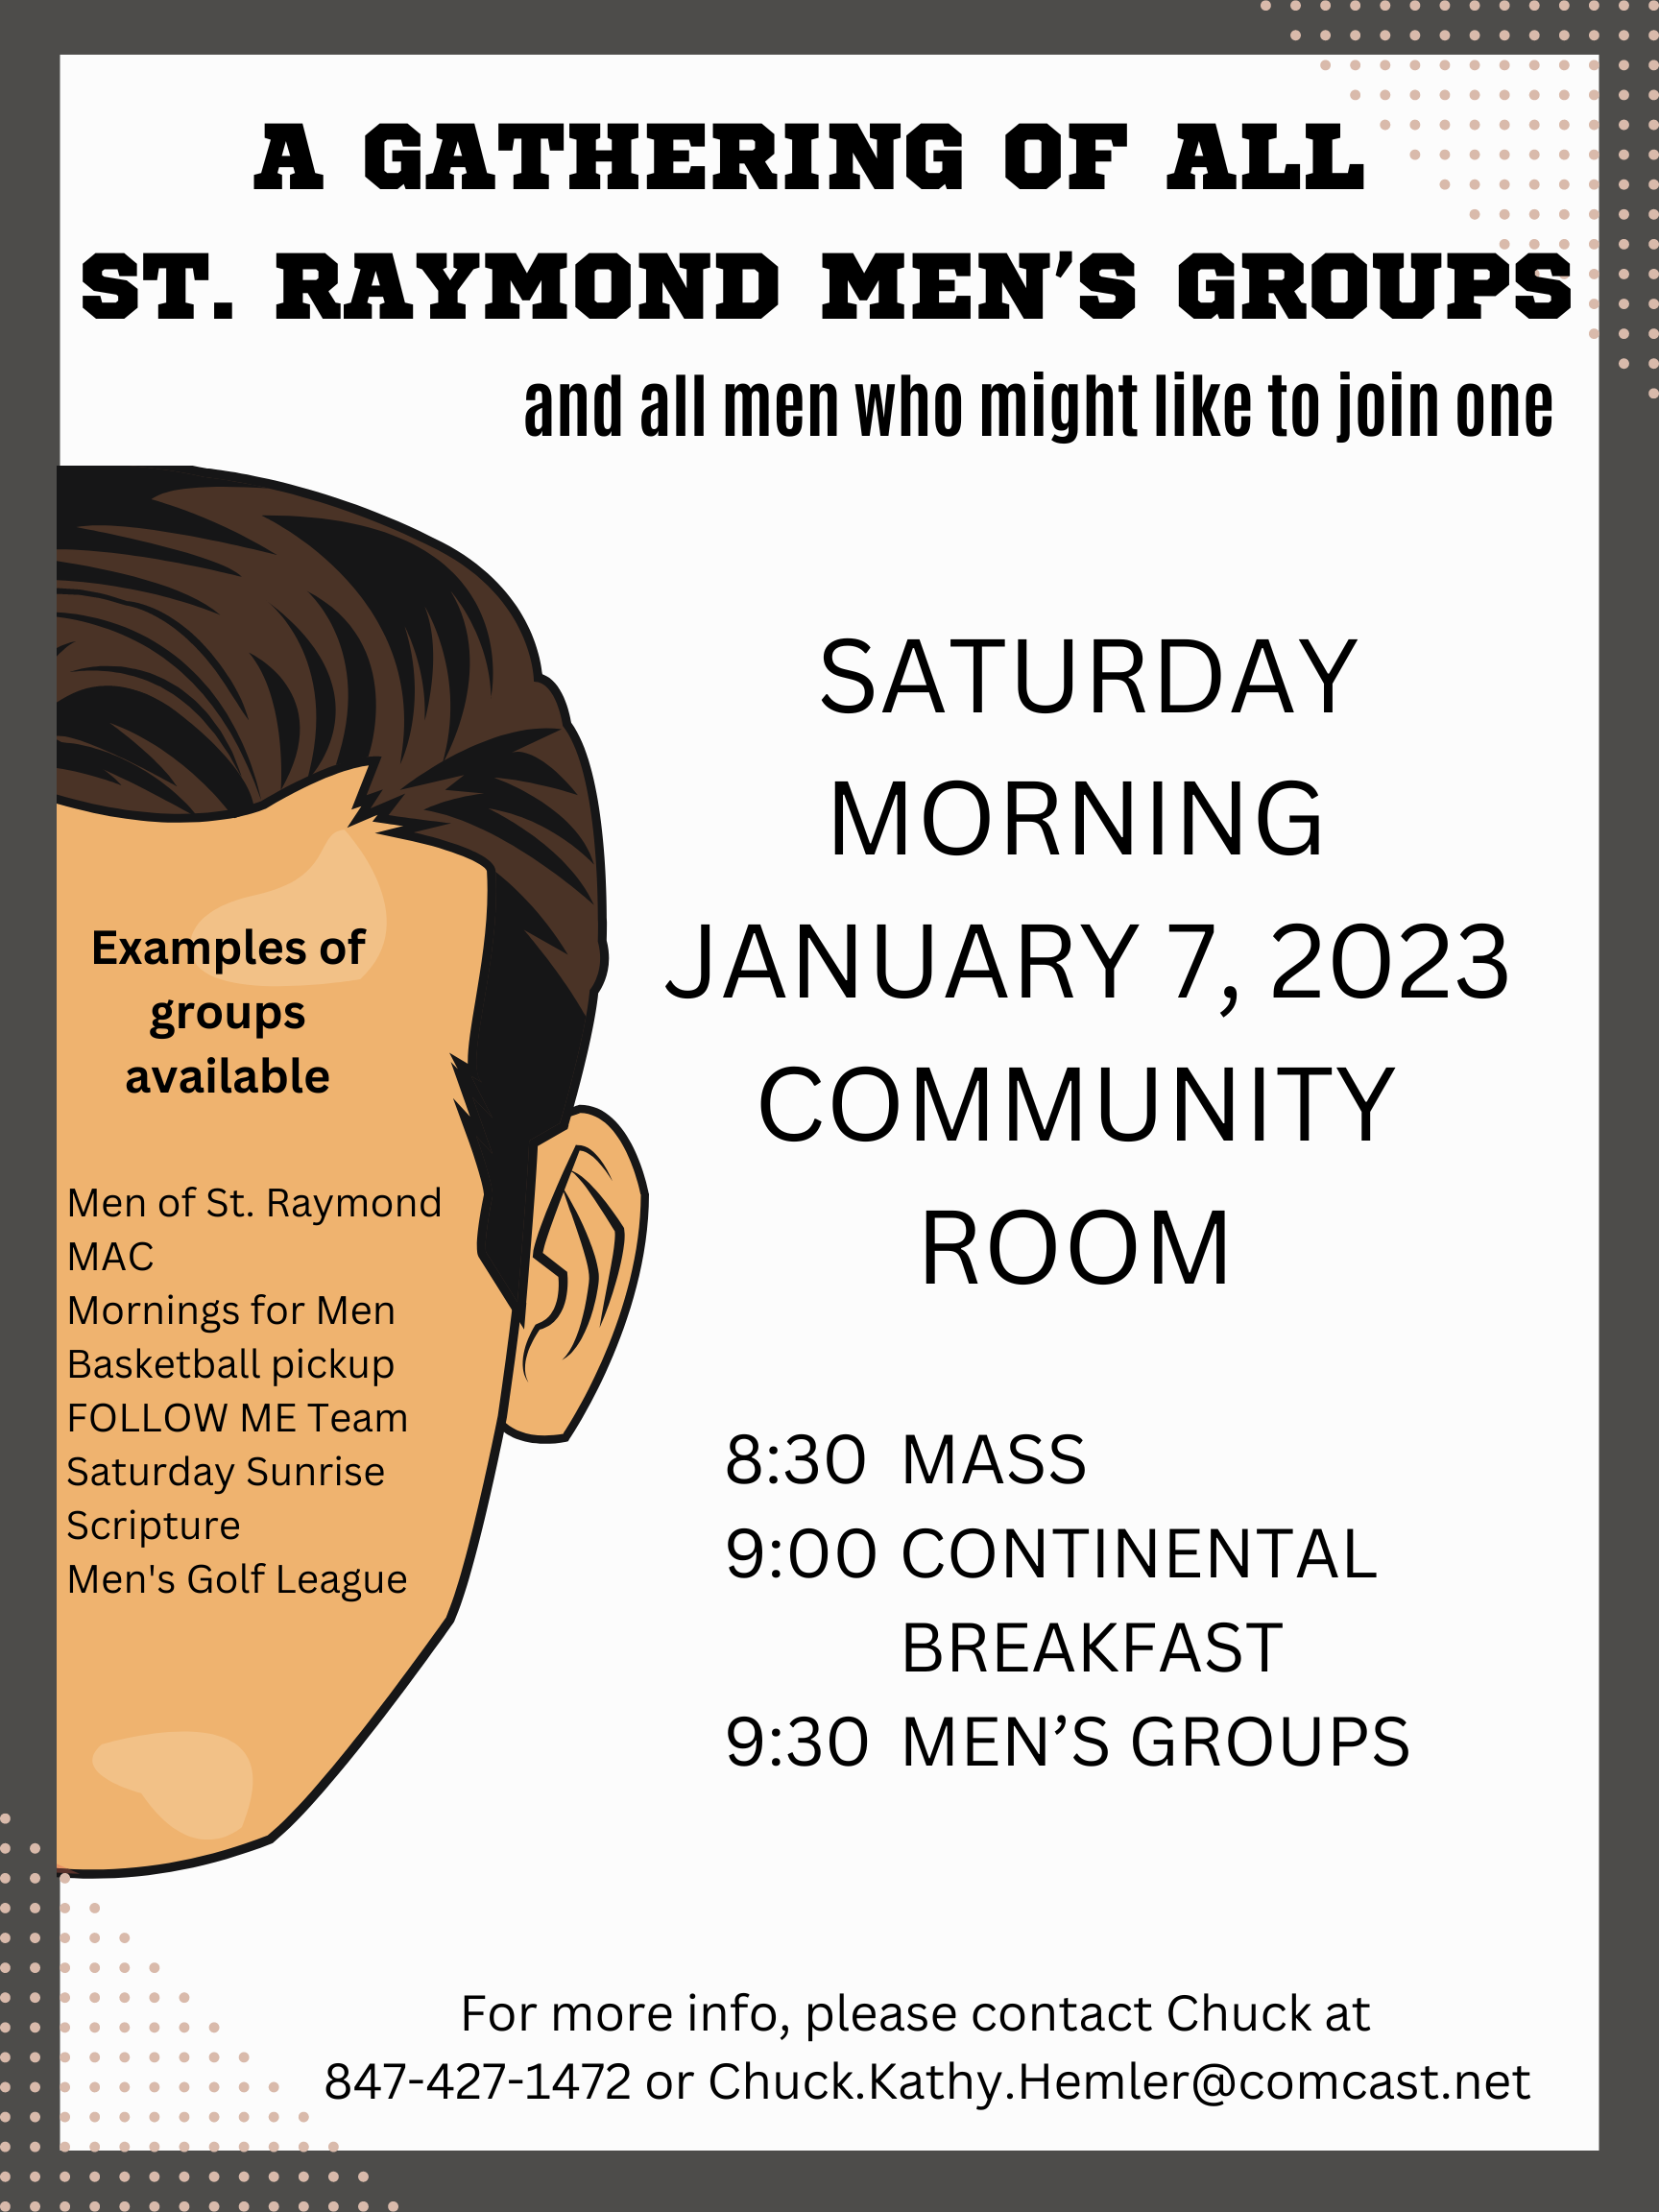 Inviting all men of St. Raymond